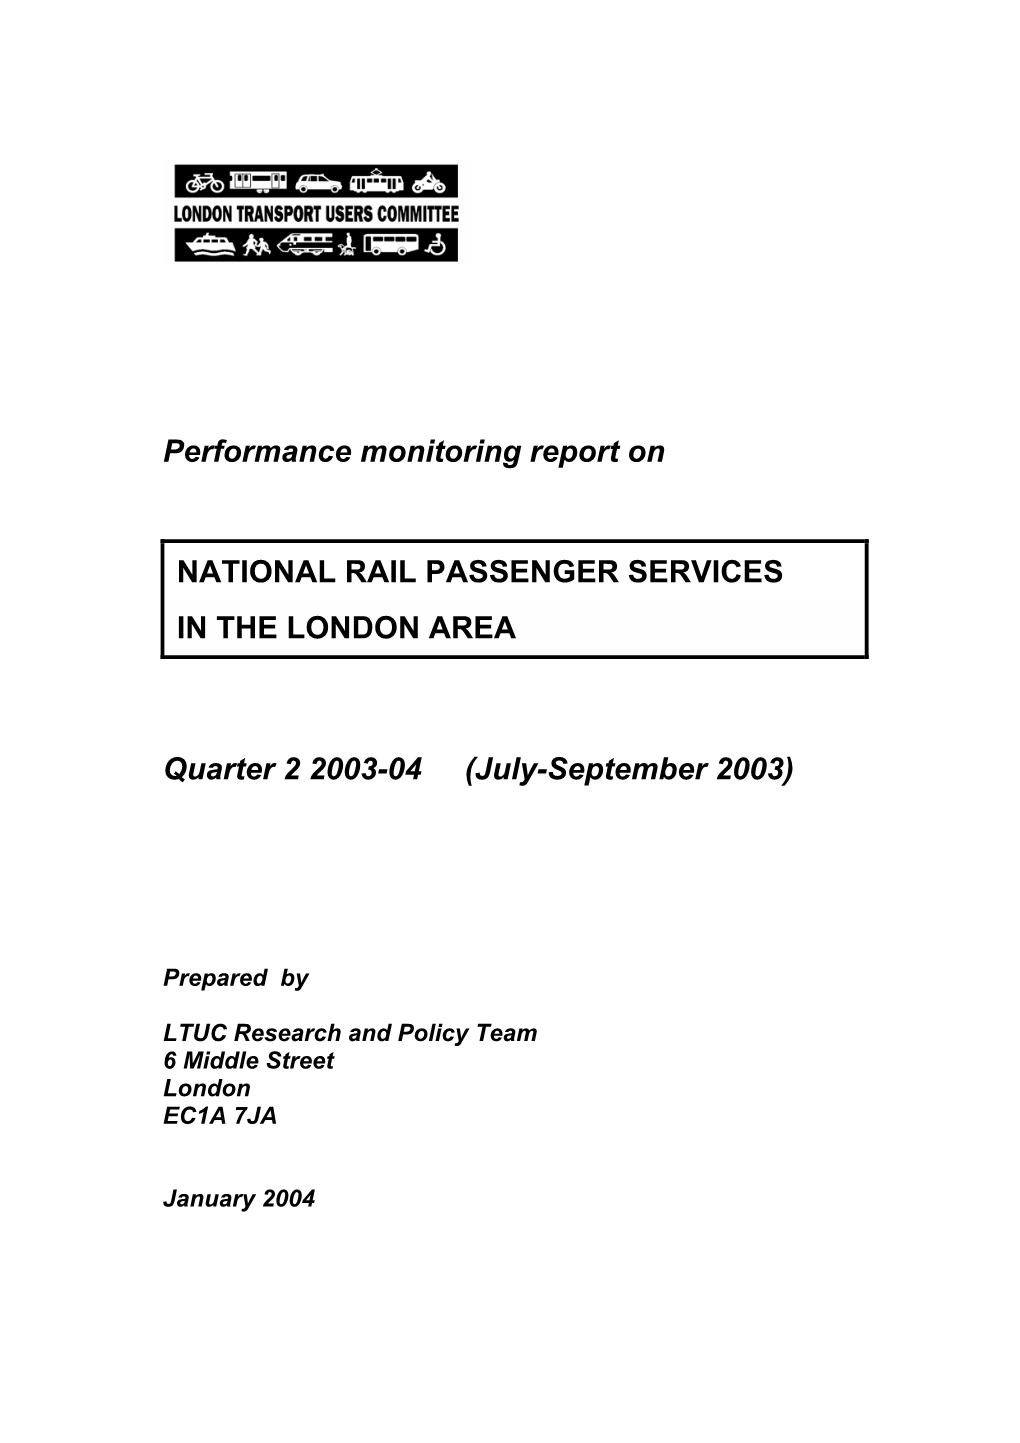 Performance Monitoring Report on NATIONAL RAIL PASSENGER